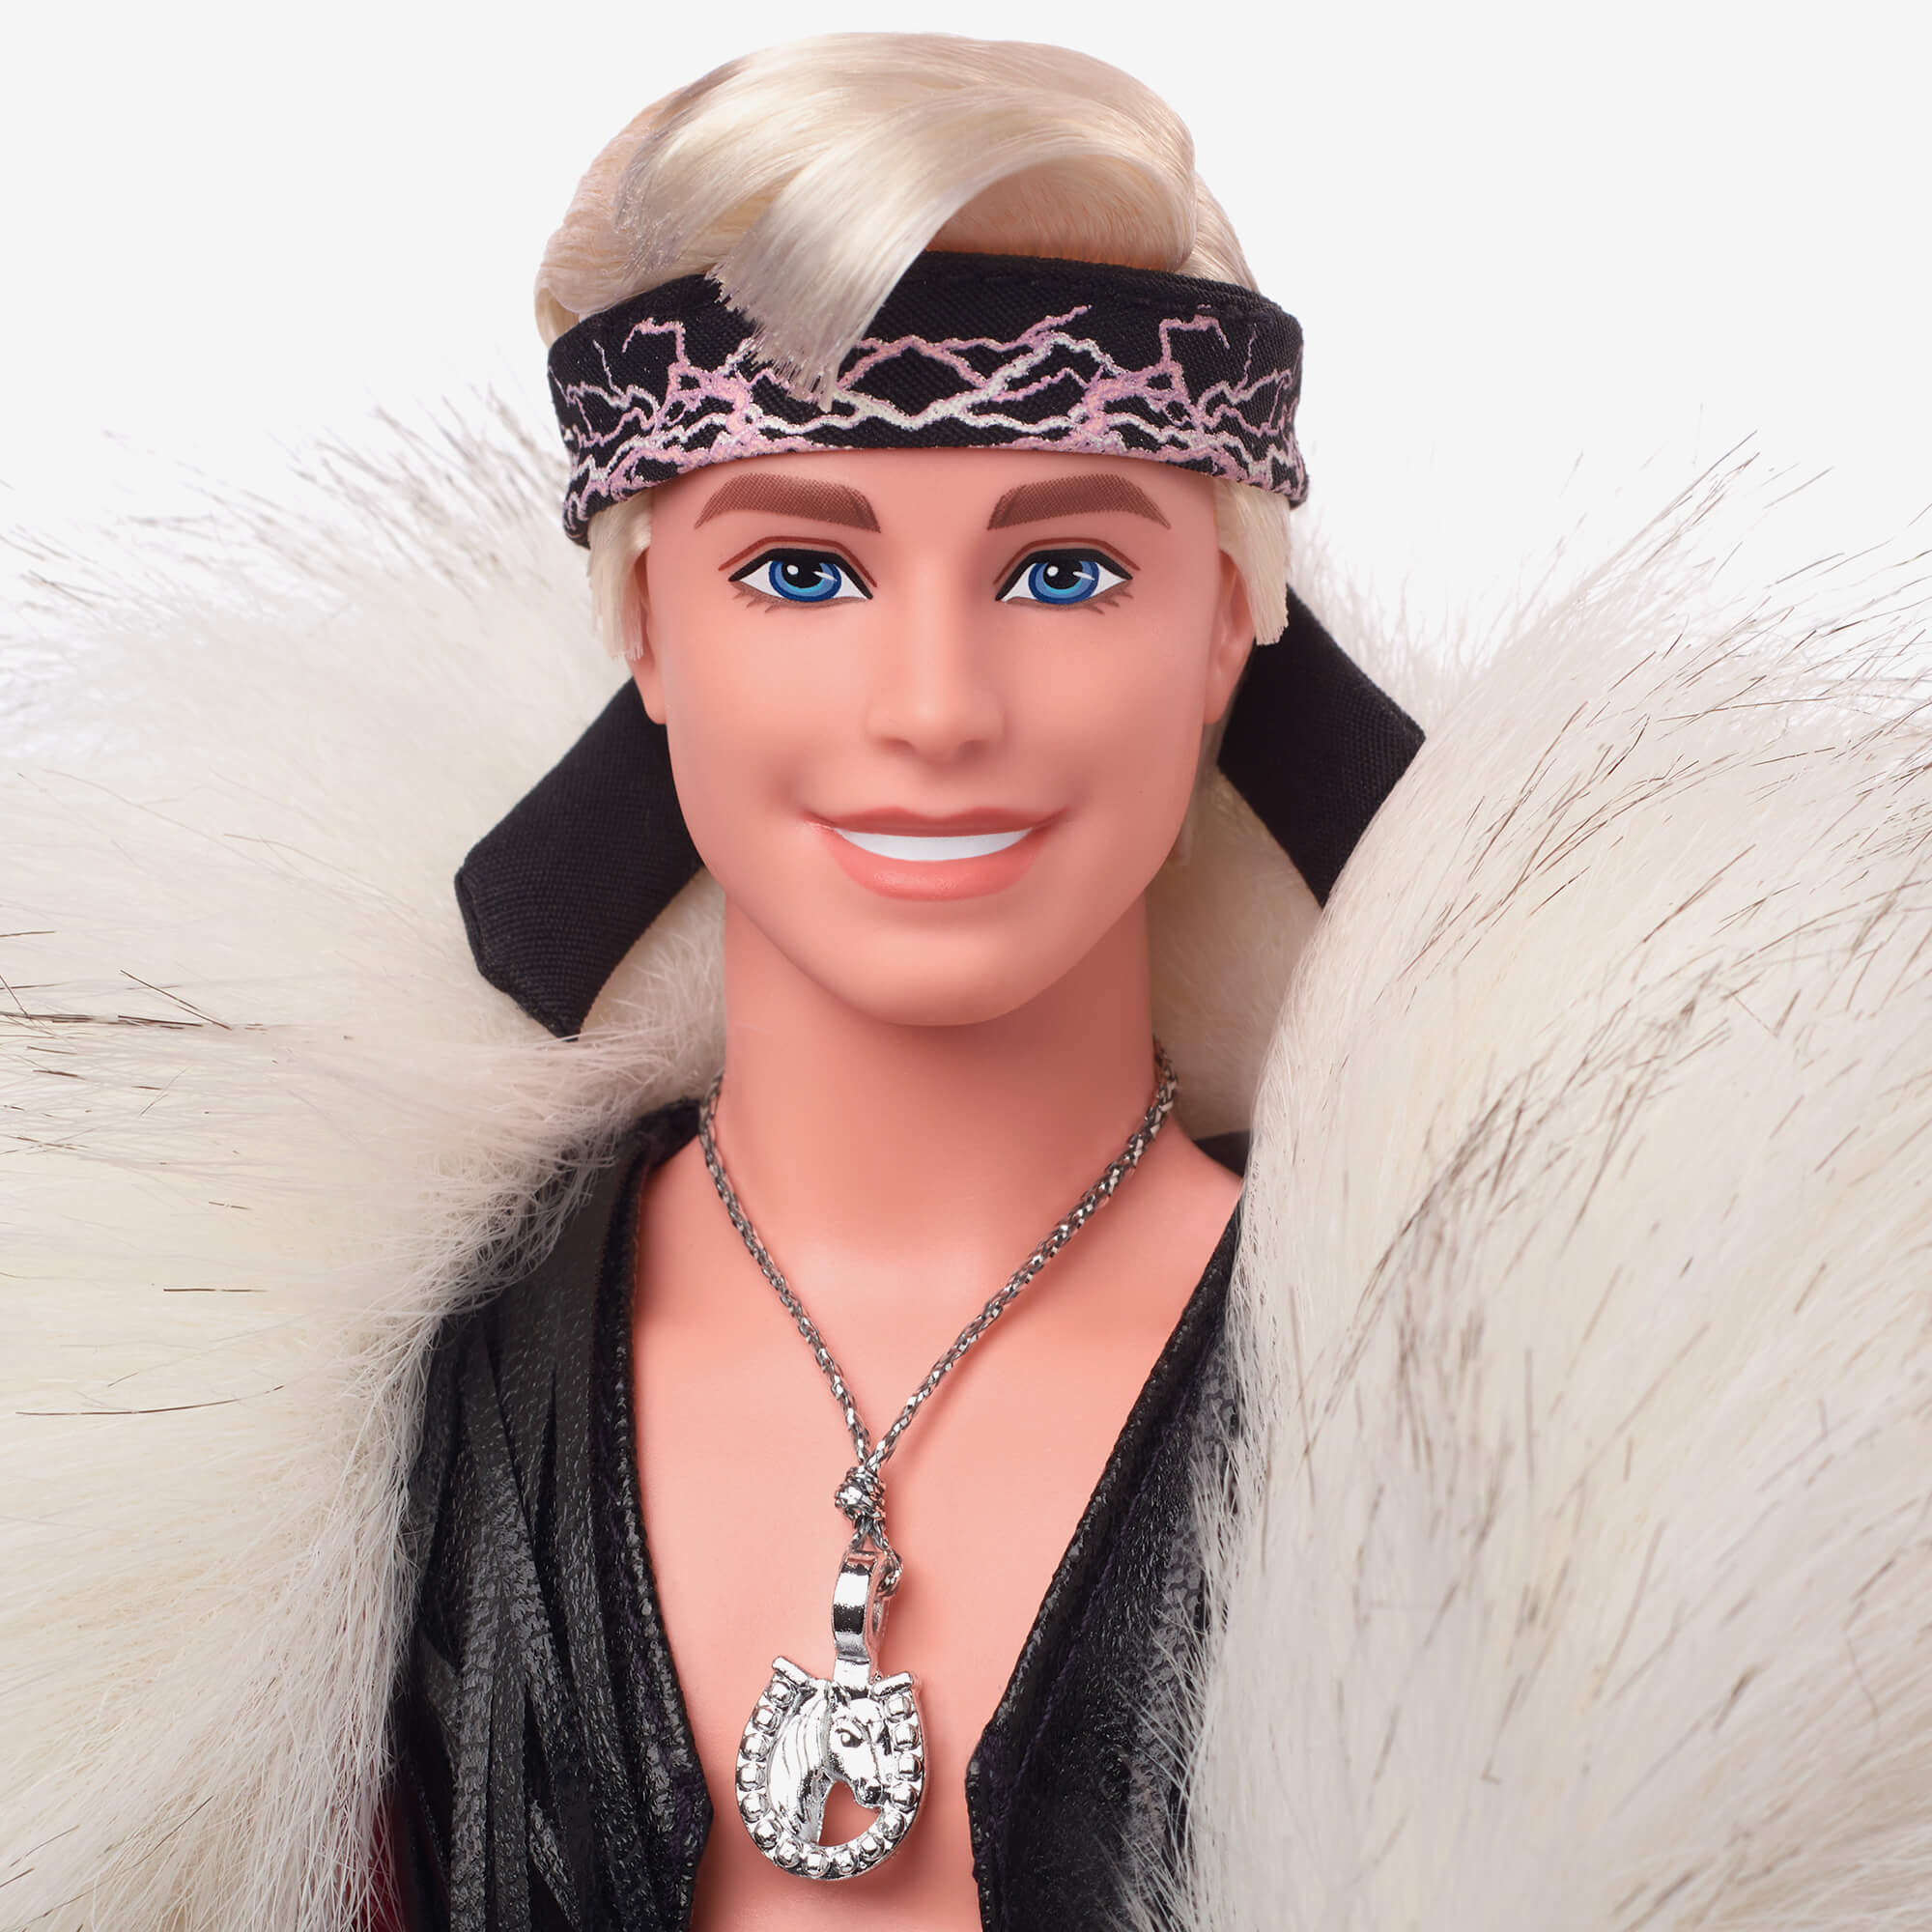 Ken Doll in Faux Fur Coat and Black Fringe Vest – Barbie The Movie – Mattel  Creations